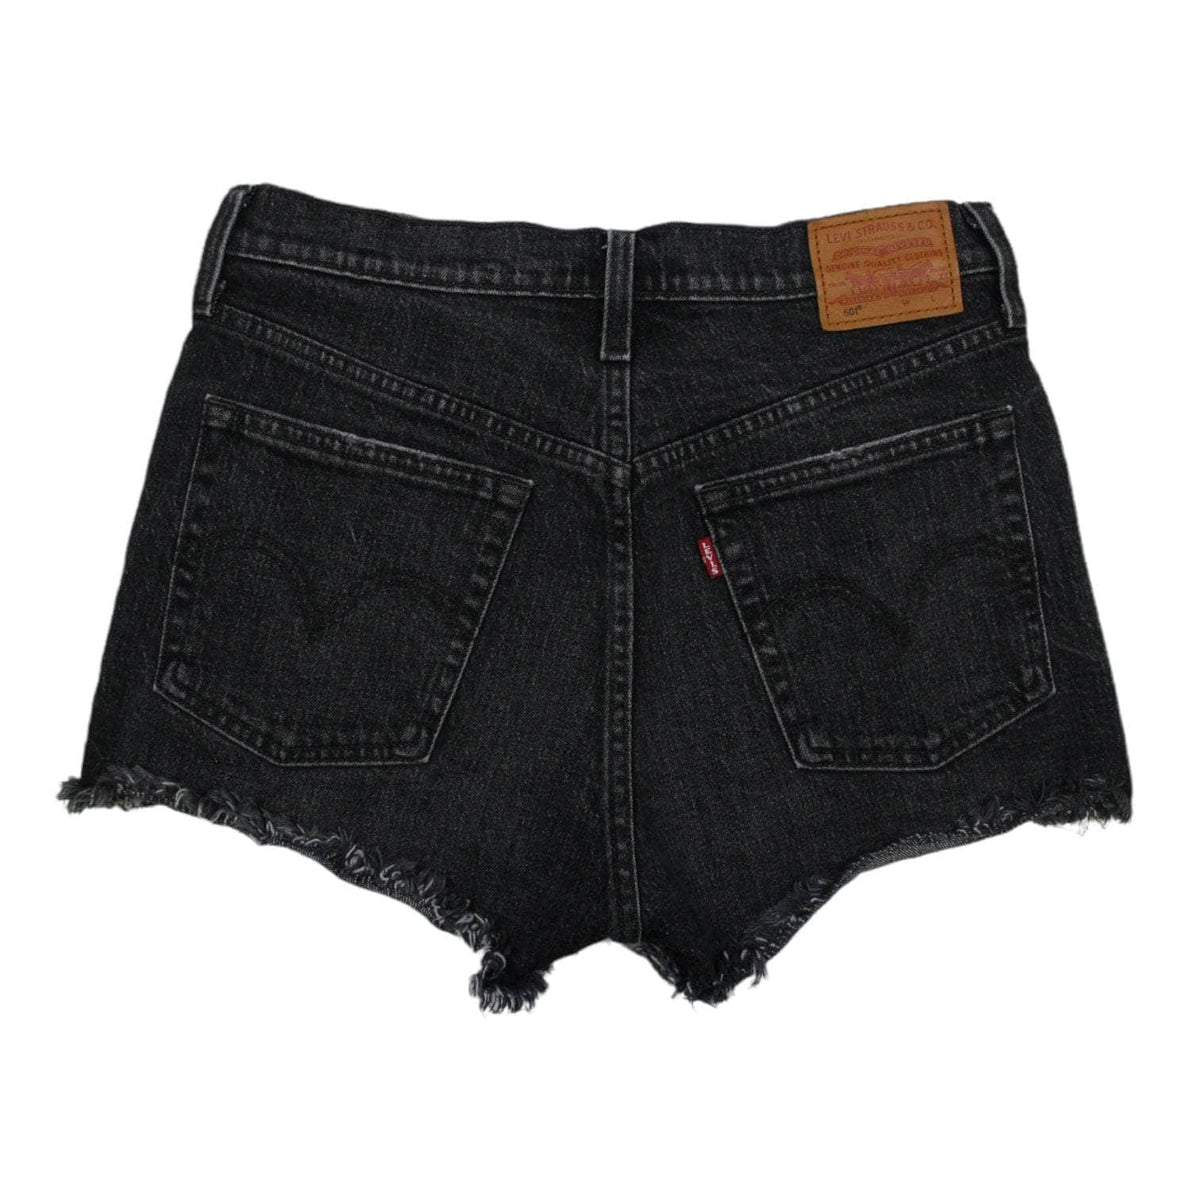 Levis 501 Black Distressed Denim Shorts